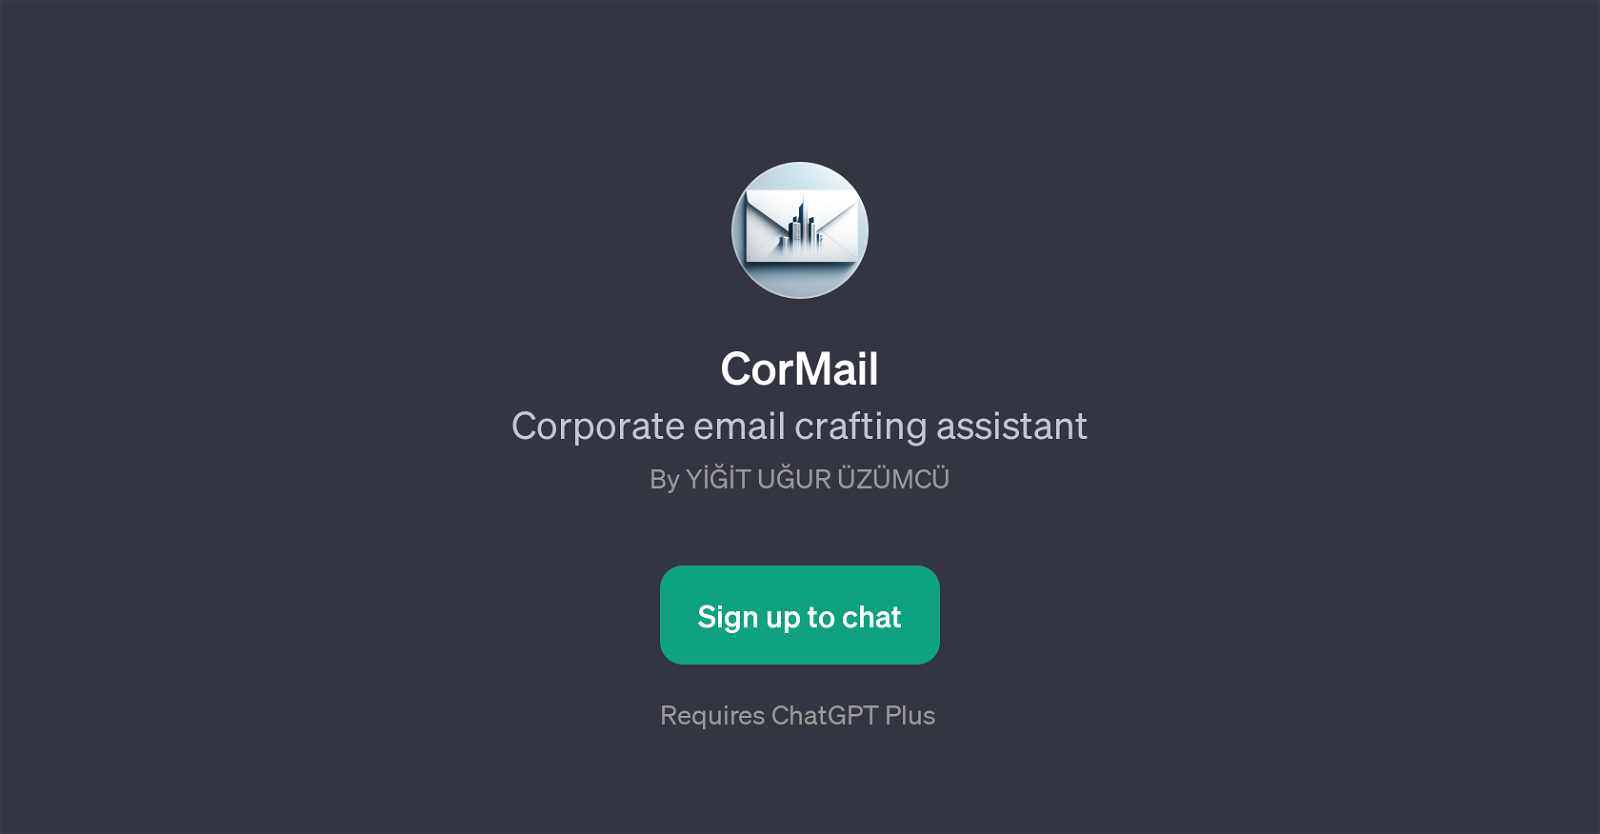 CorMail website